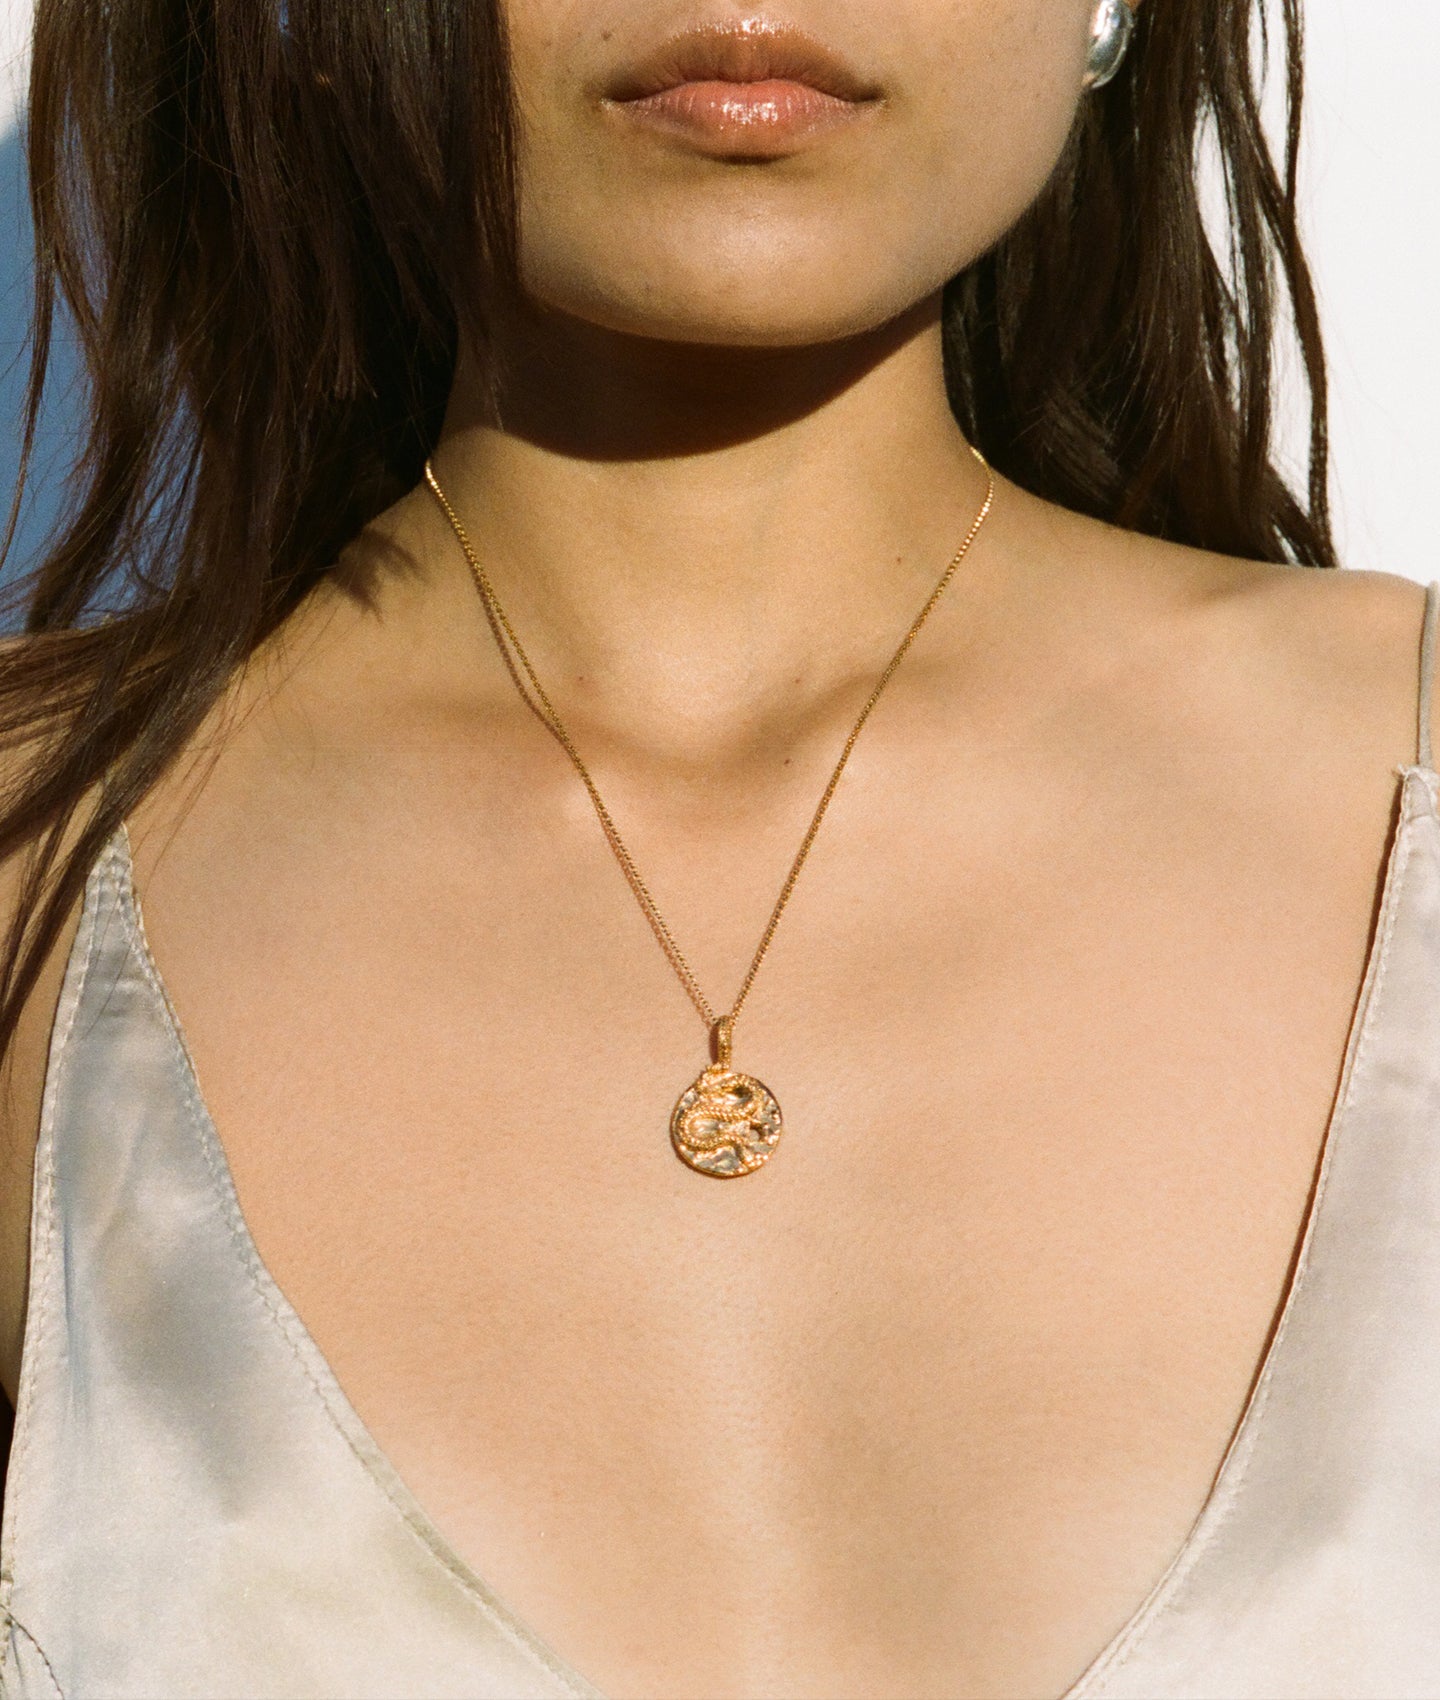 Model wearing Alighieri Medusa Necklace Coiled Snake Motif Gold Medallion